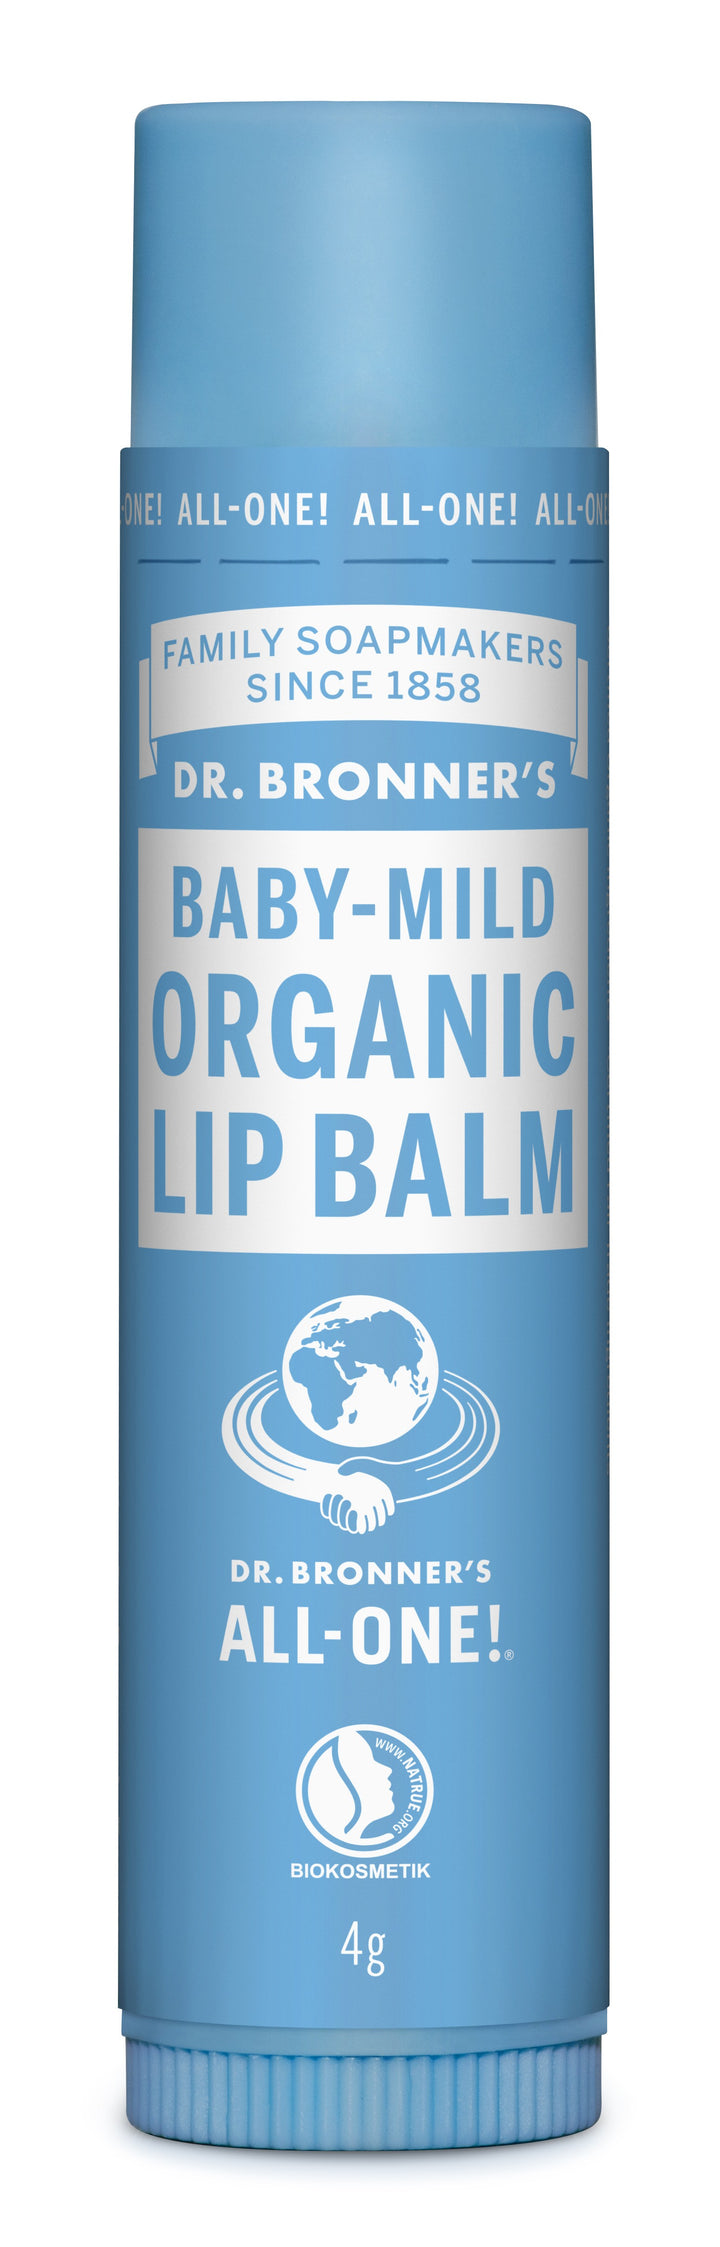 Dr. Bronner's Organic Lip Balm - Baby-Mild